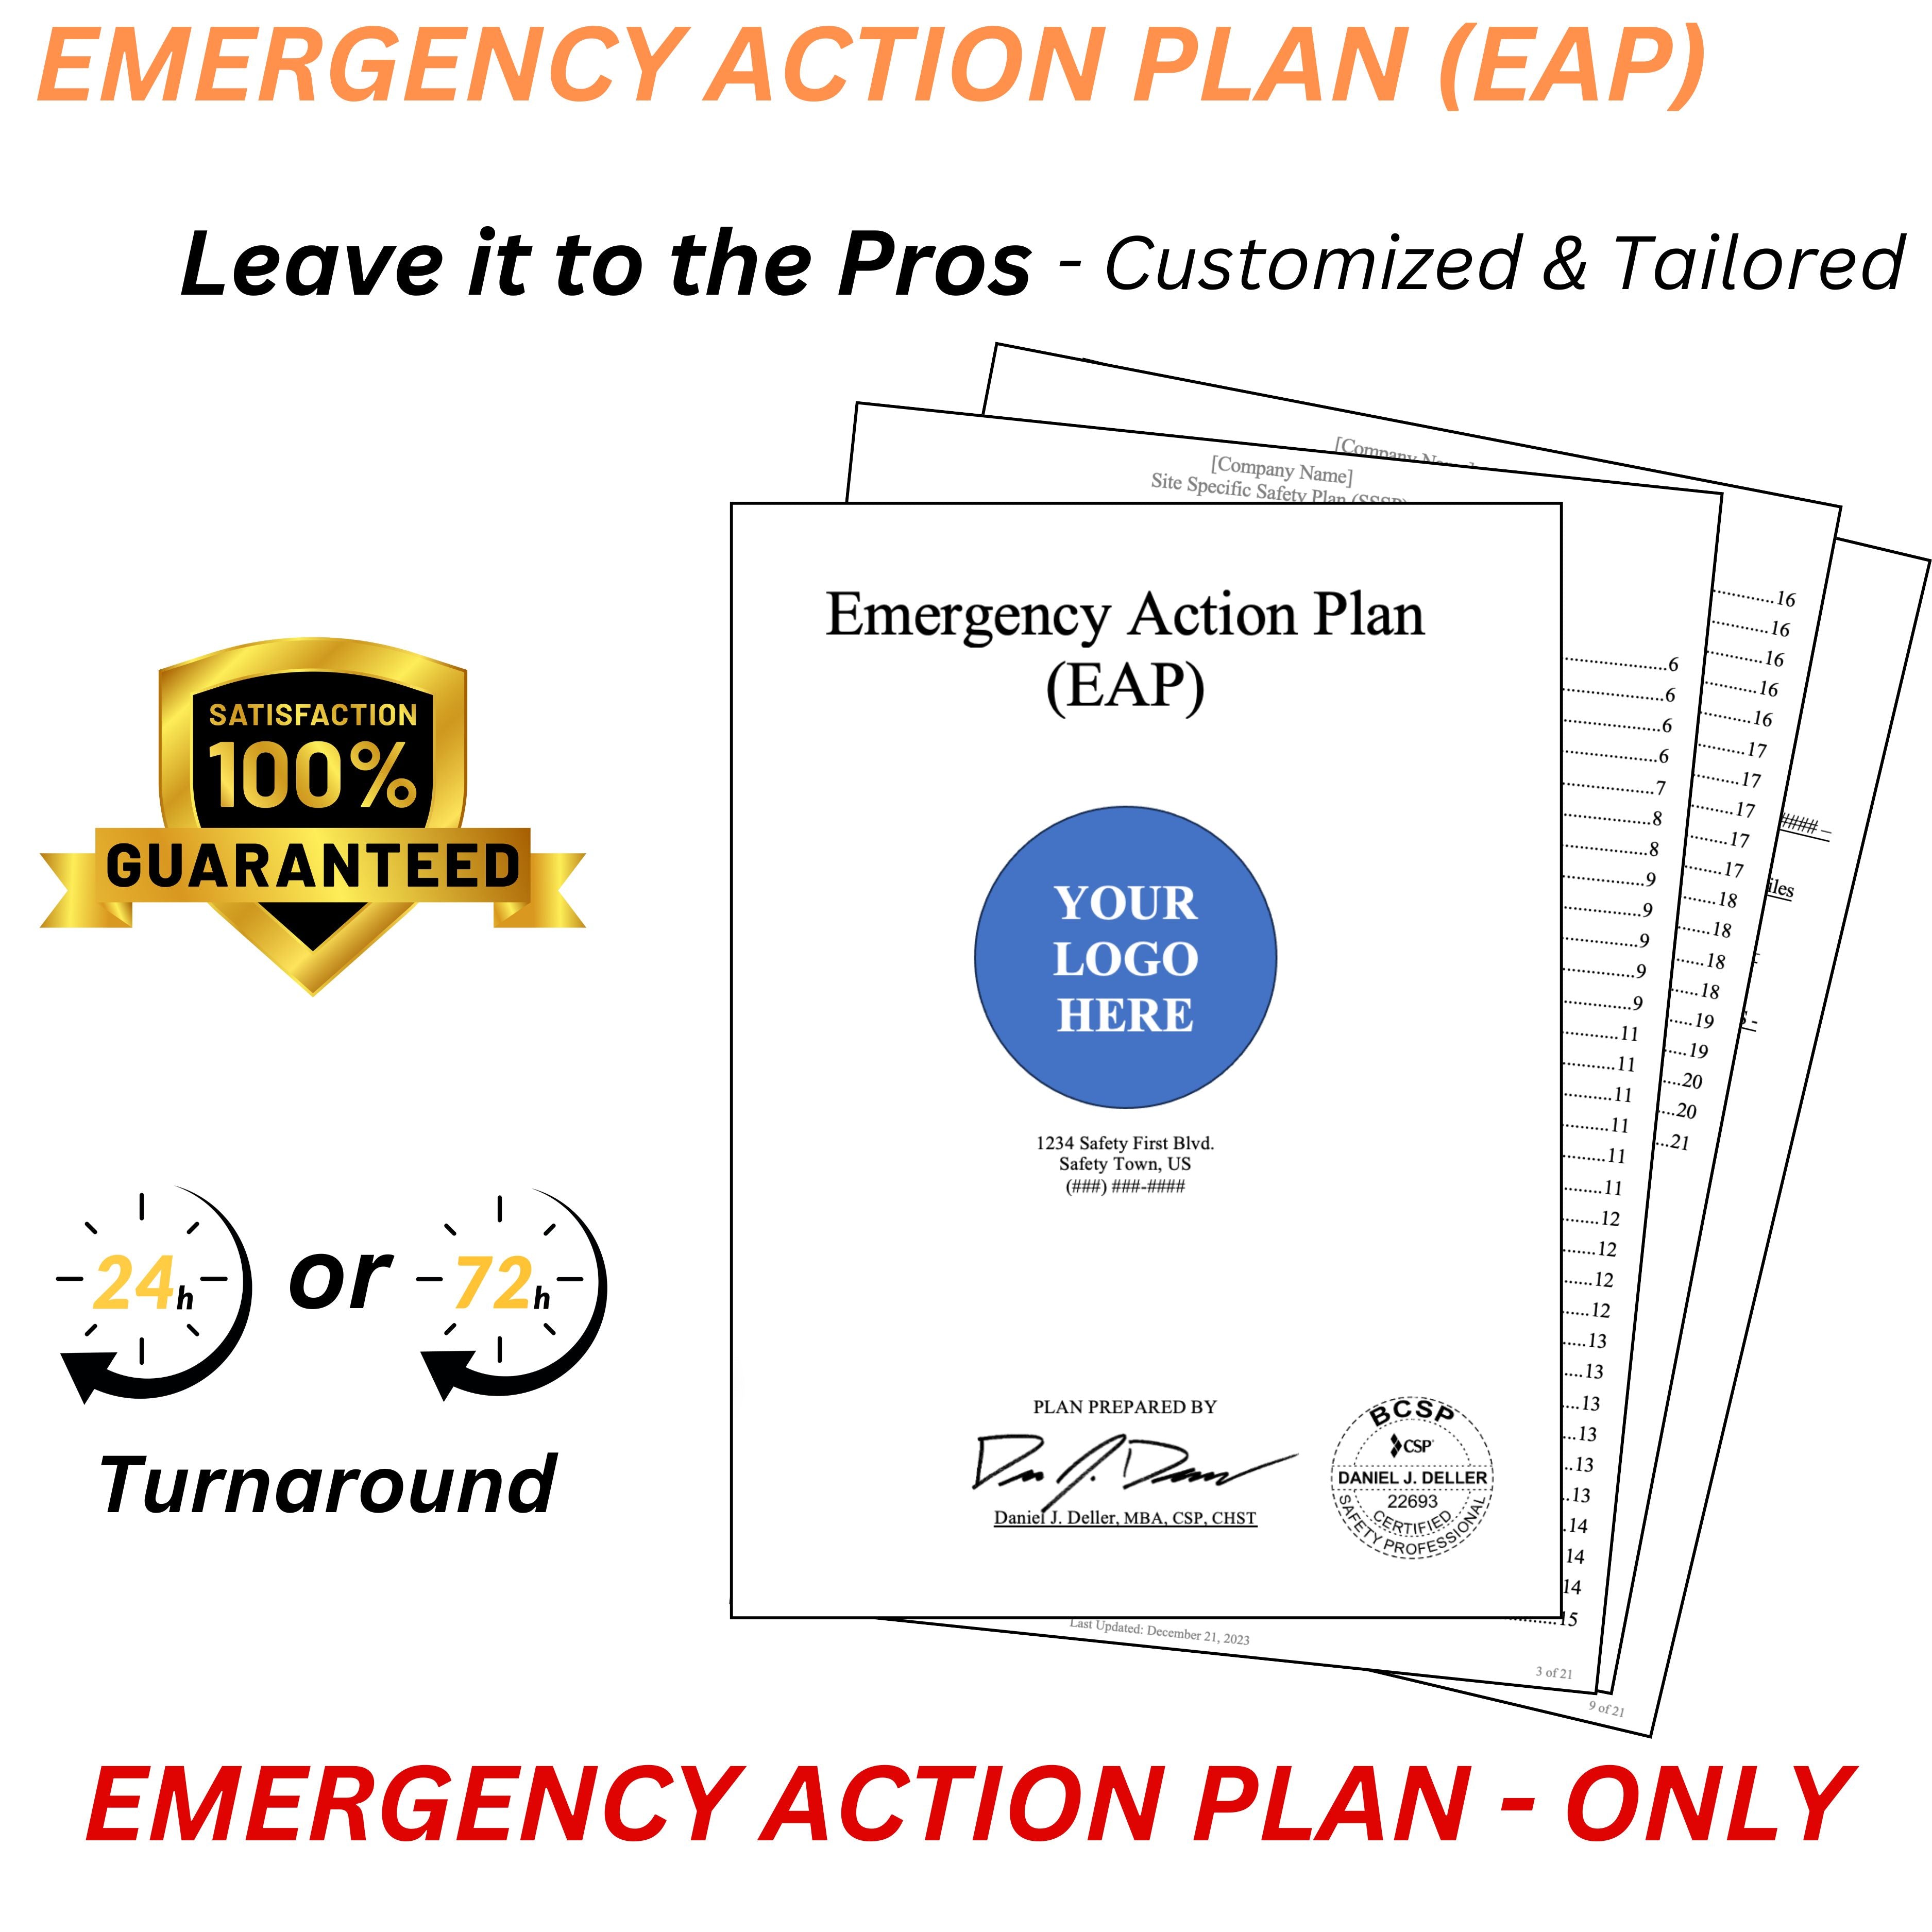 EAP - Emergency Action Plan